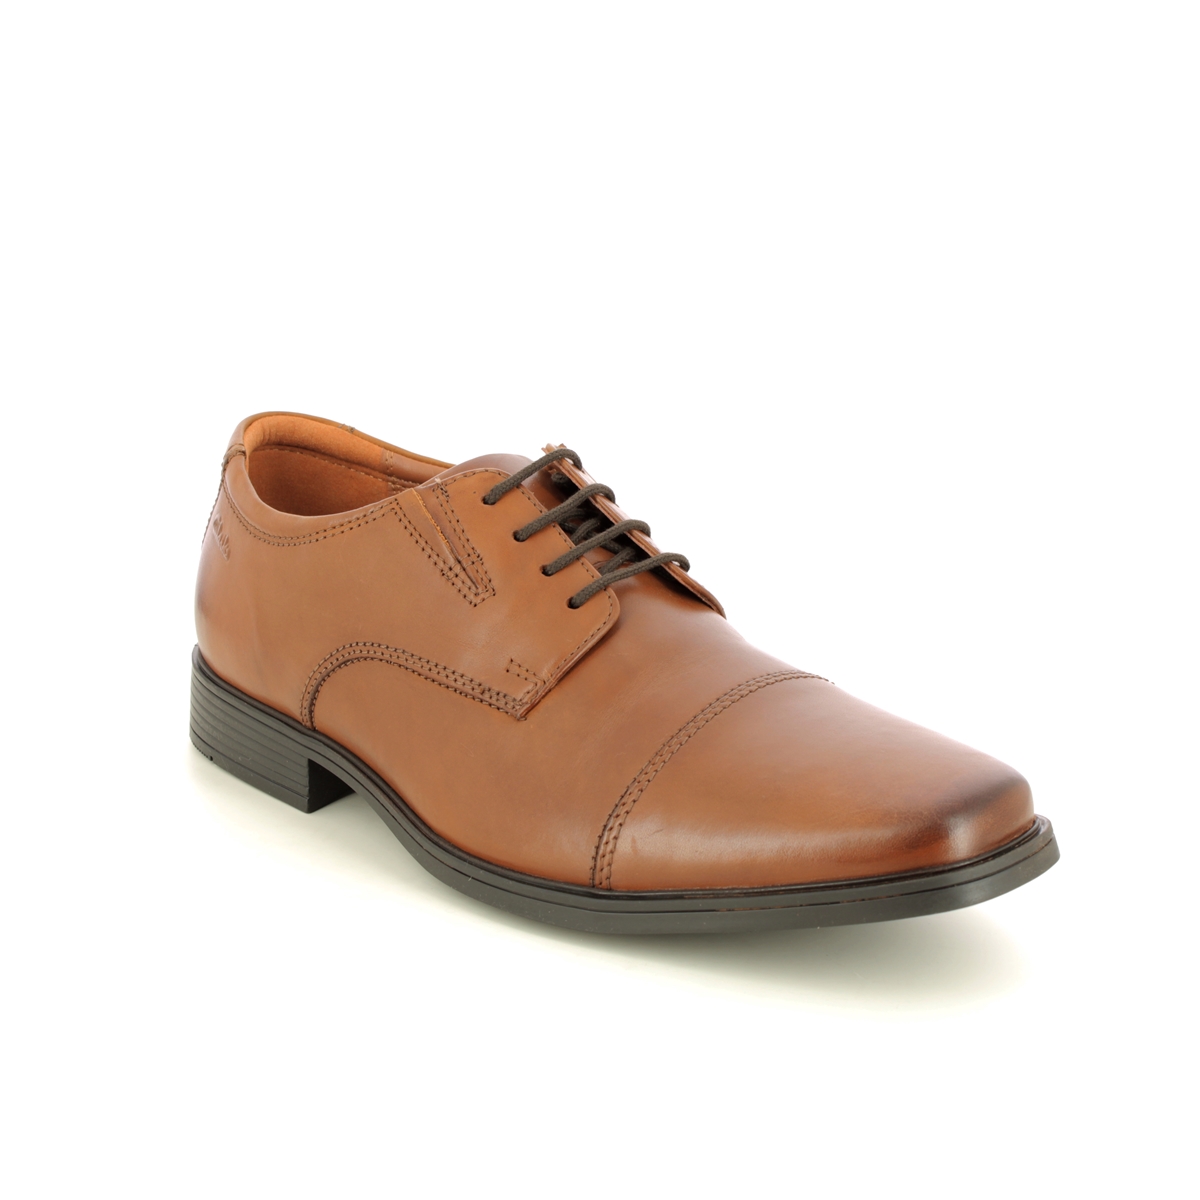 Clarks Tilden Cap Dark Tan Mens formal shoes 3009-67G in a Plain Leather in Size 8